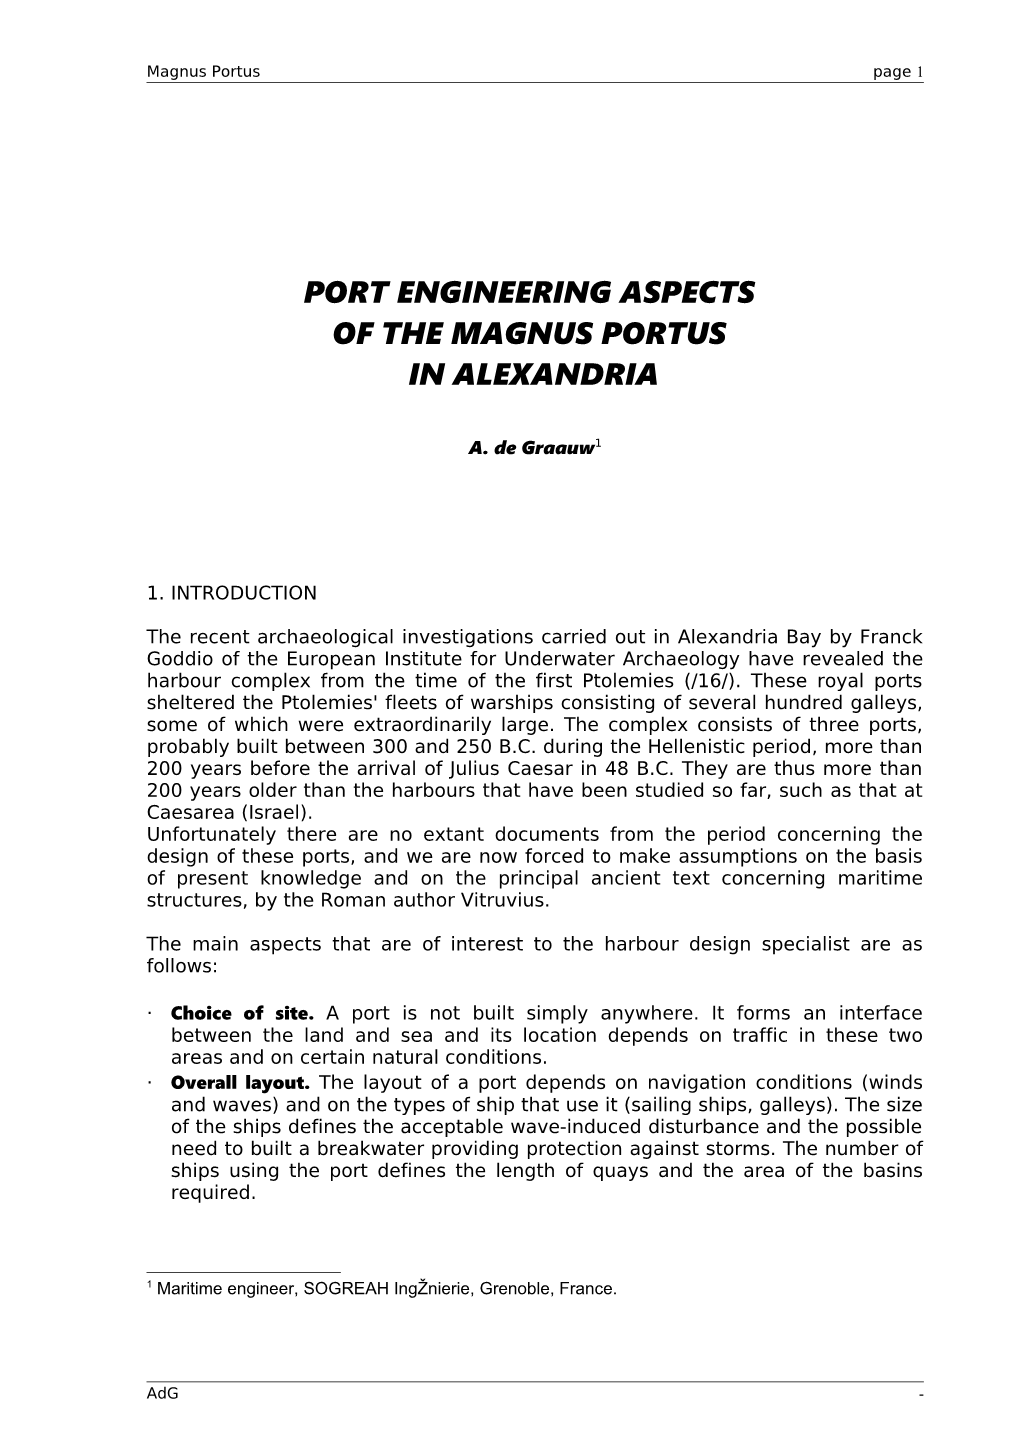 Port Engineering Aspects